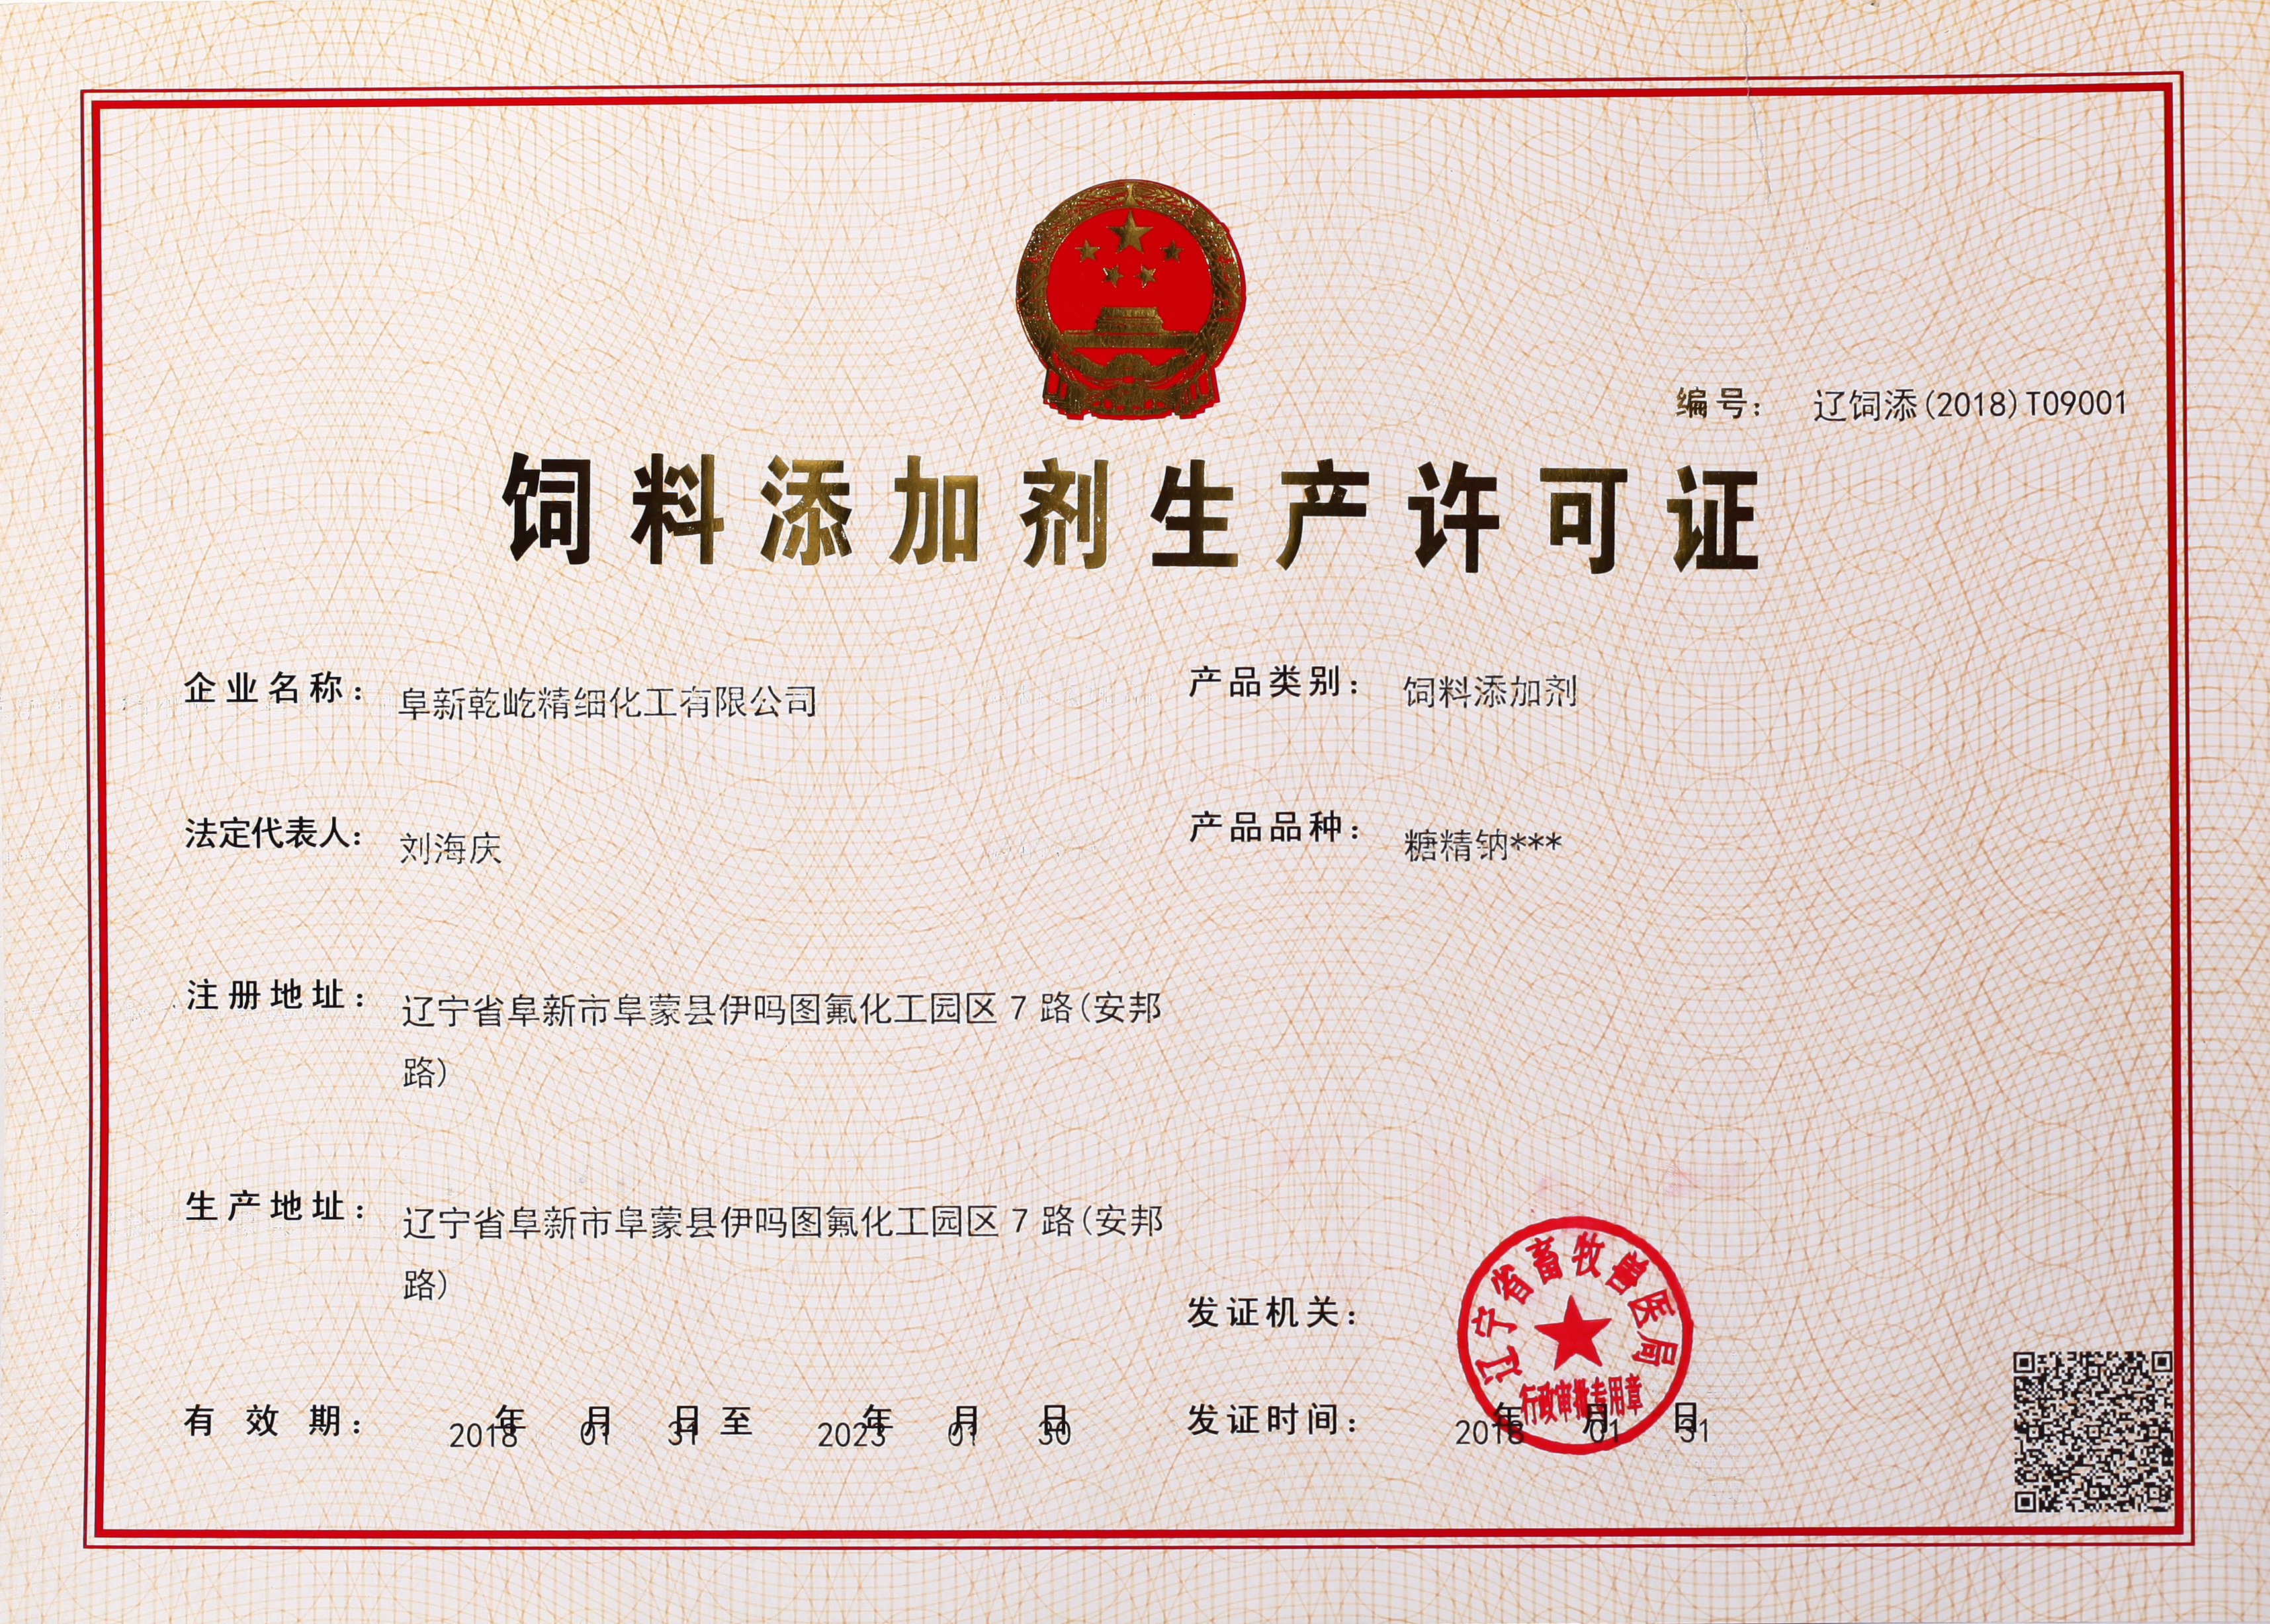 Production Certificate.JPG